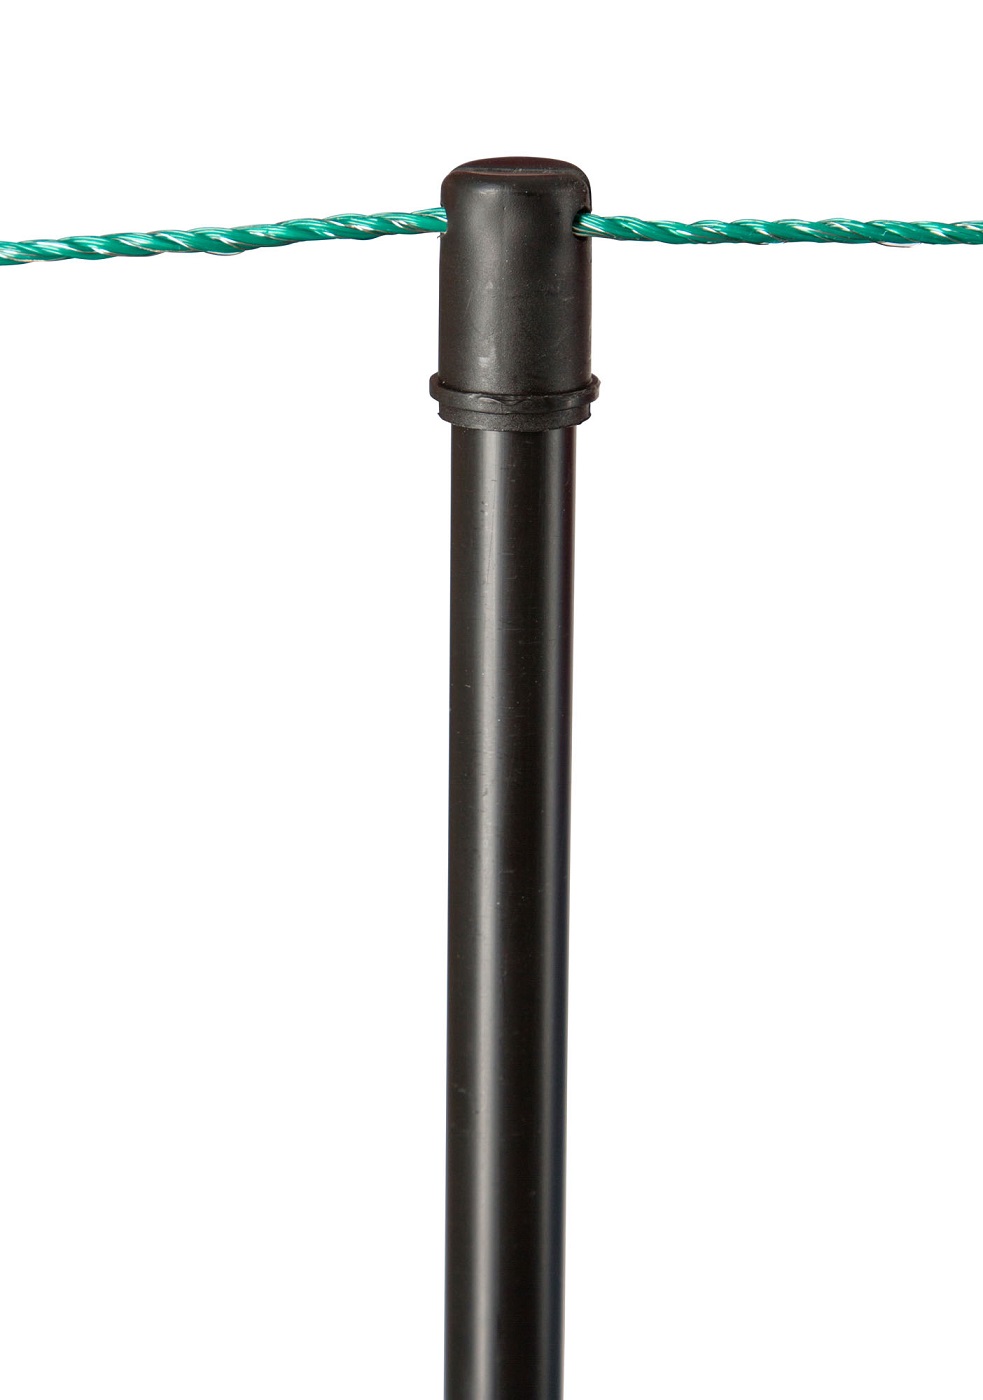 OviNet Schafnetz Doppelspitze 90 cm - 50 m grün